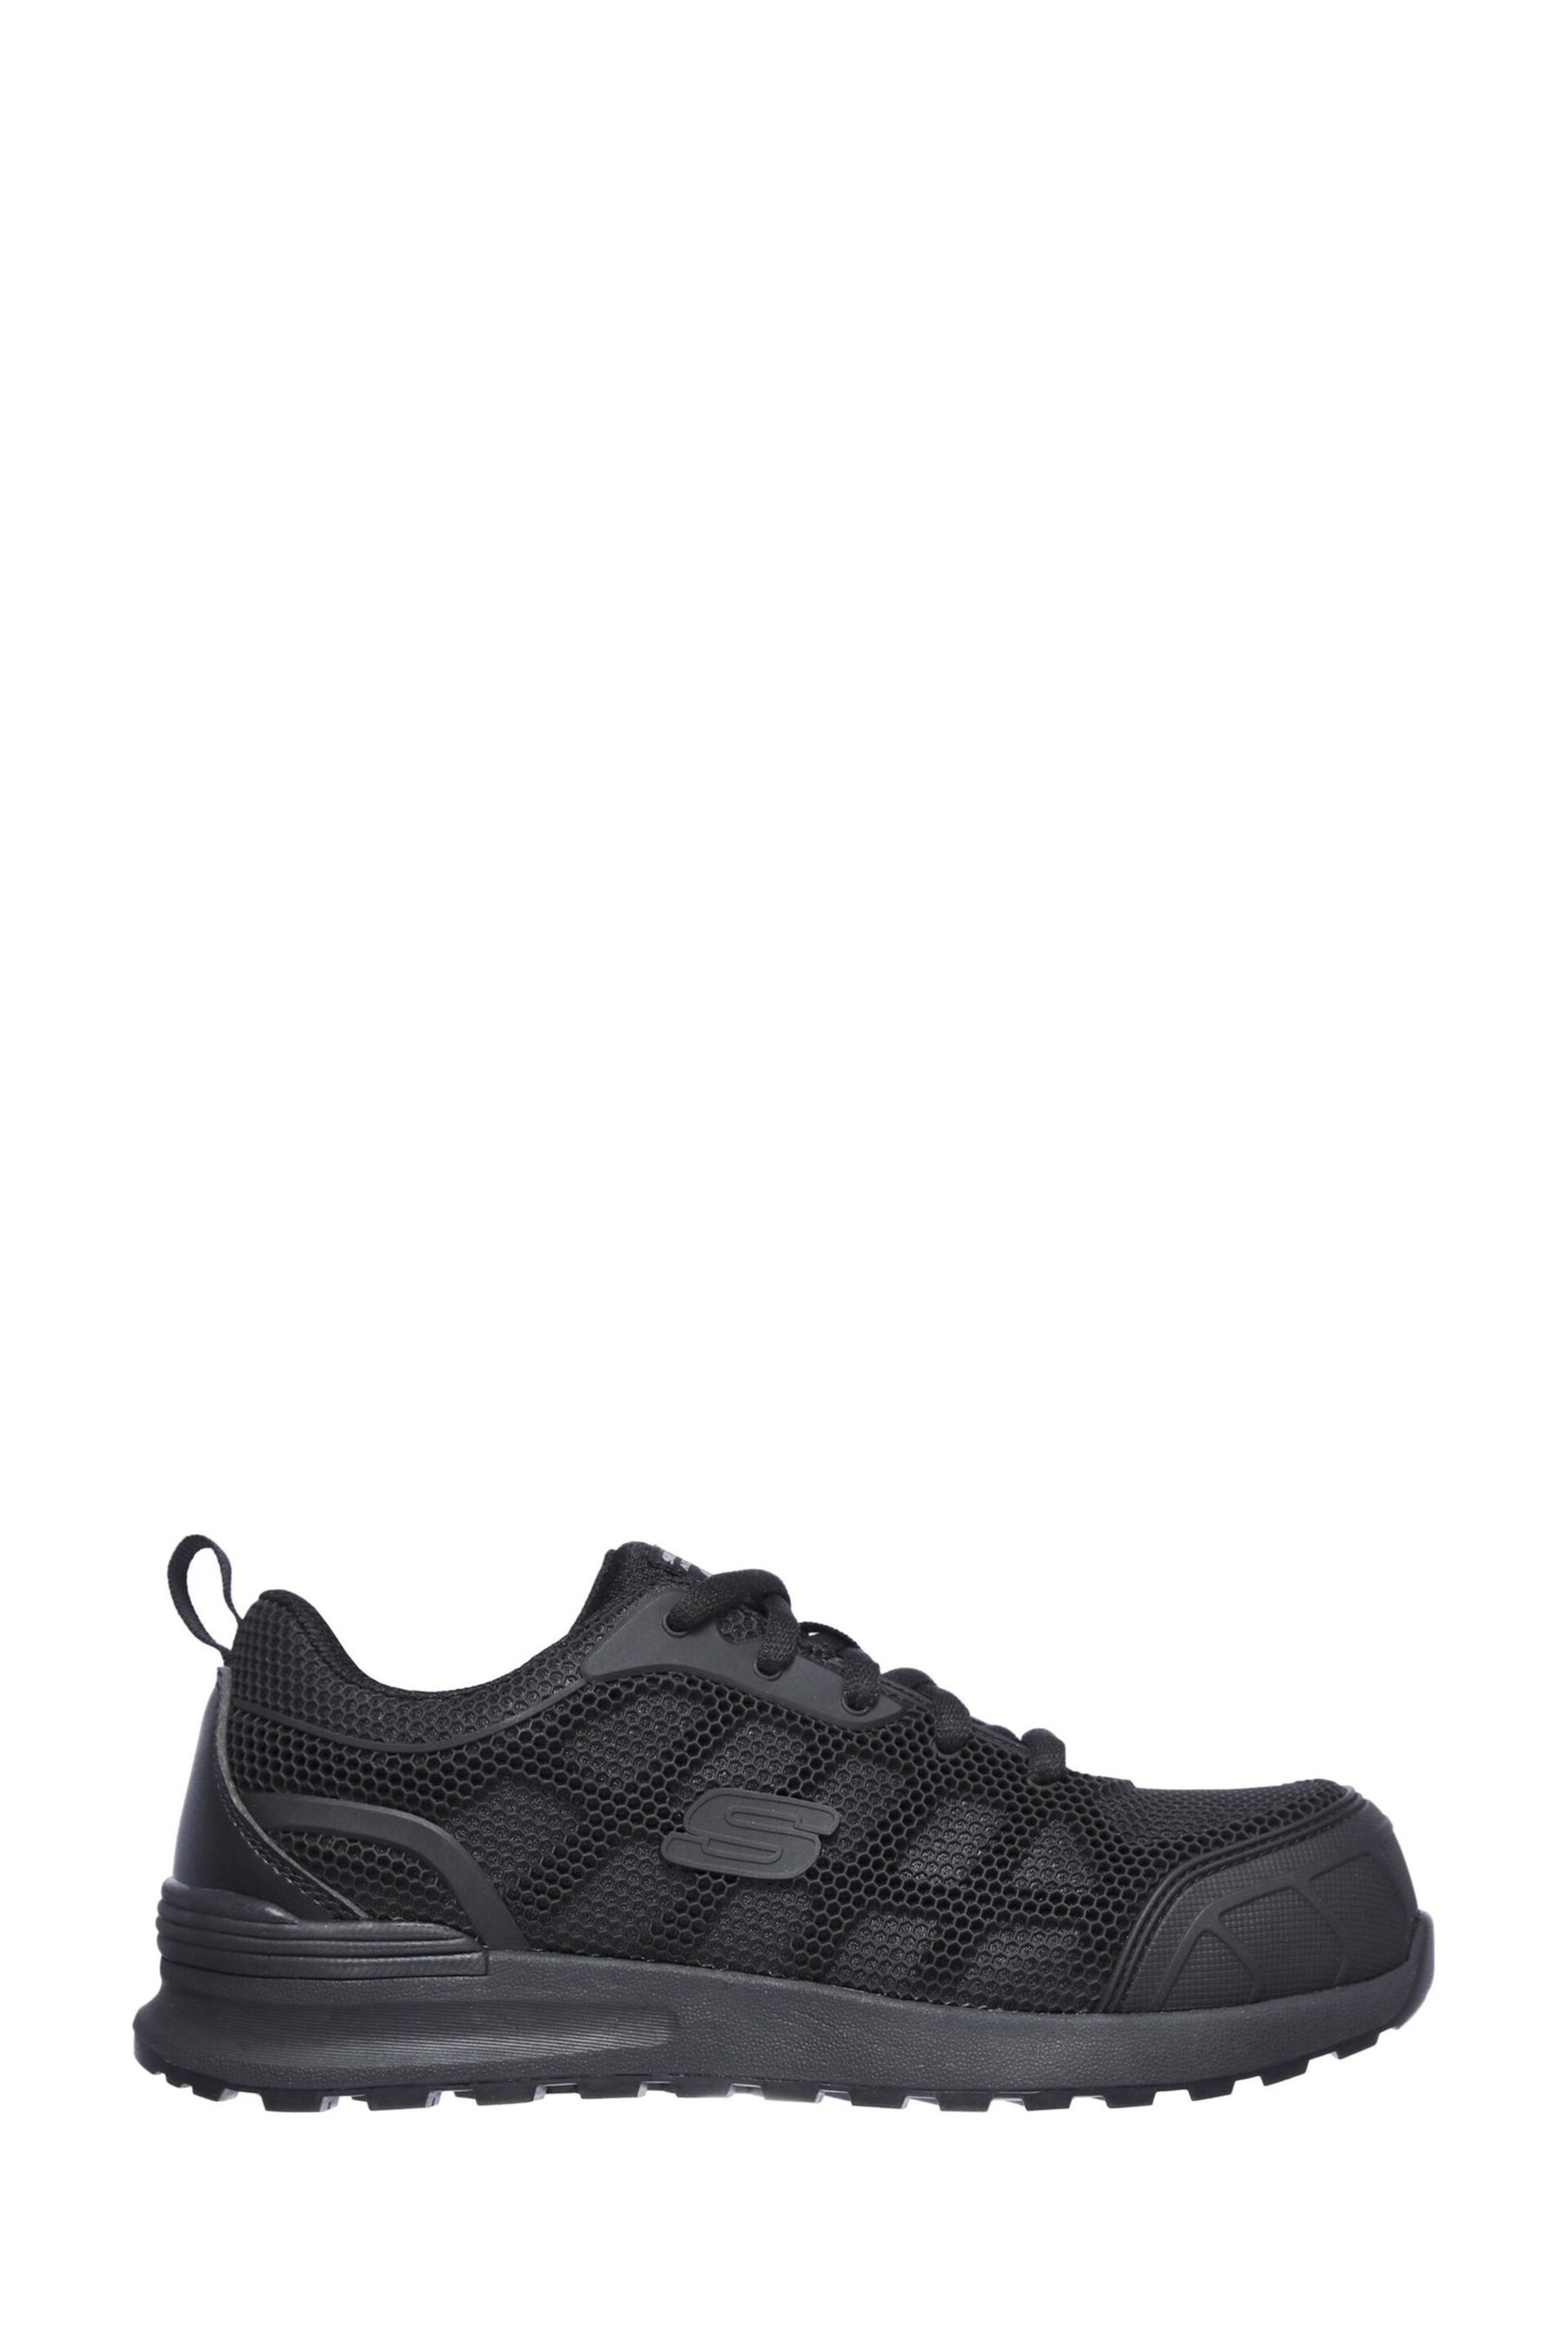 Skechers Black Bulklin Ayak Safety Shoes - Image 2 of 6